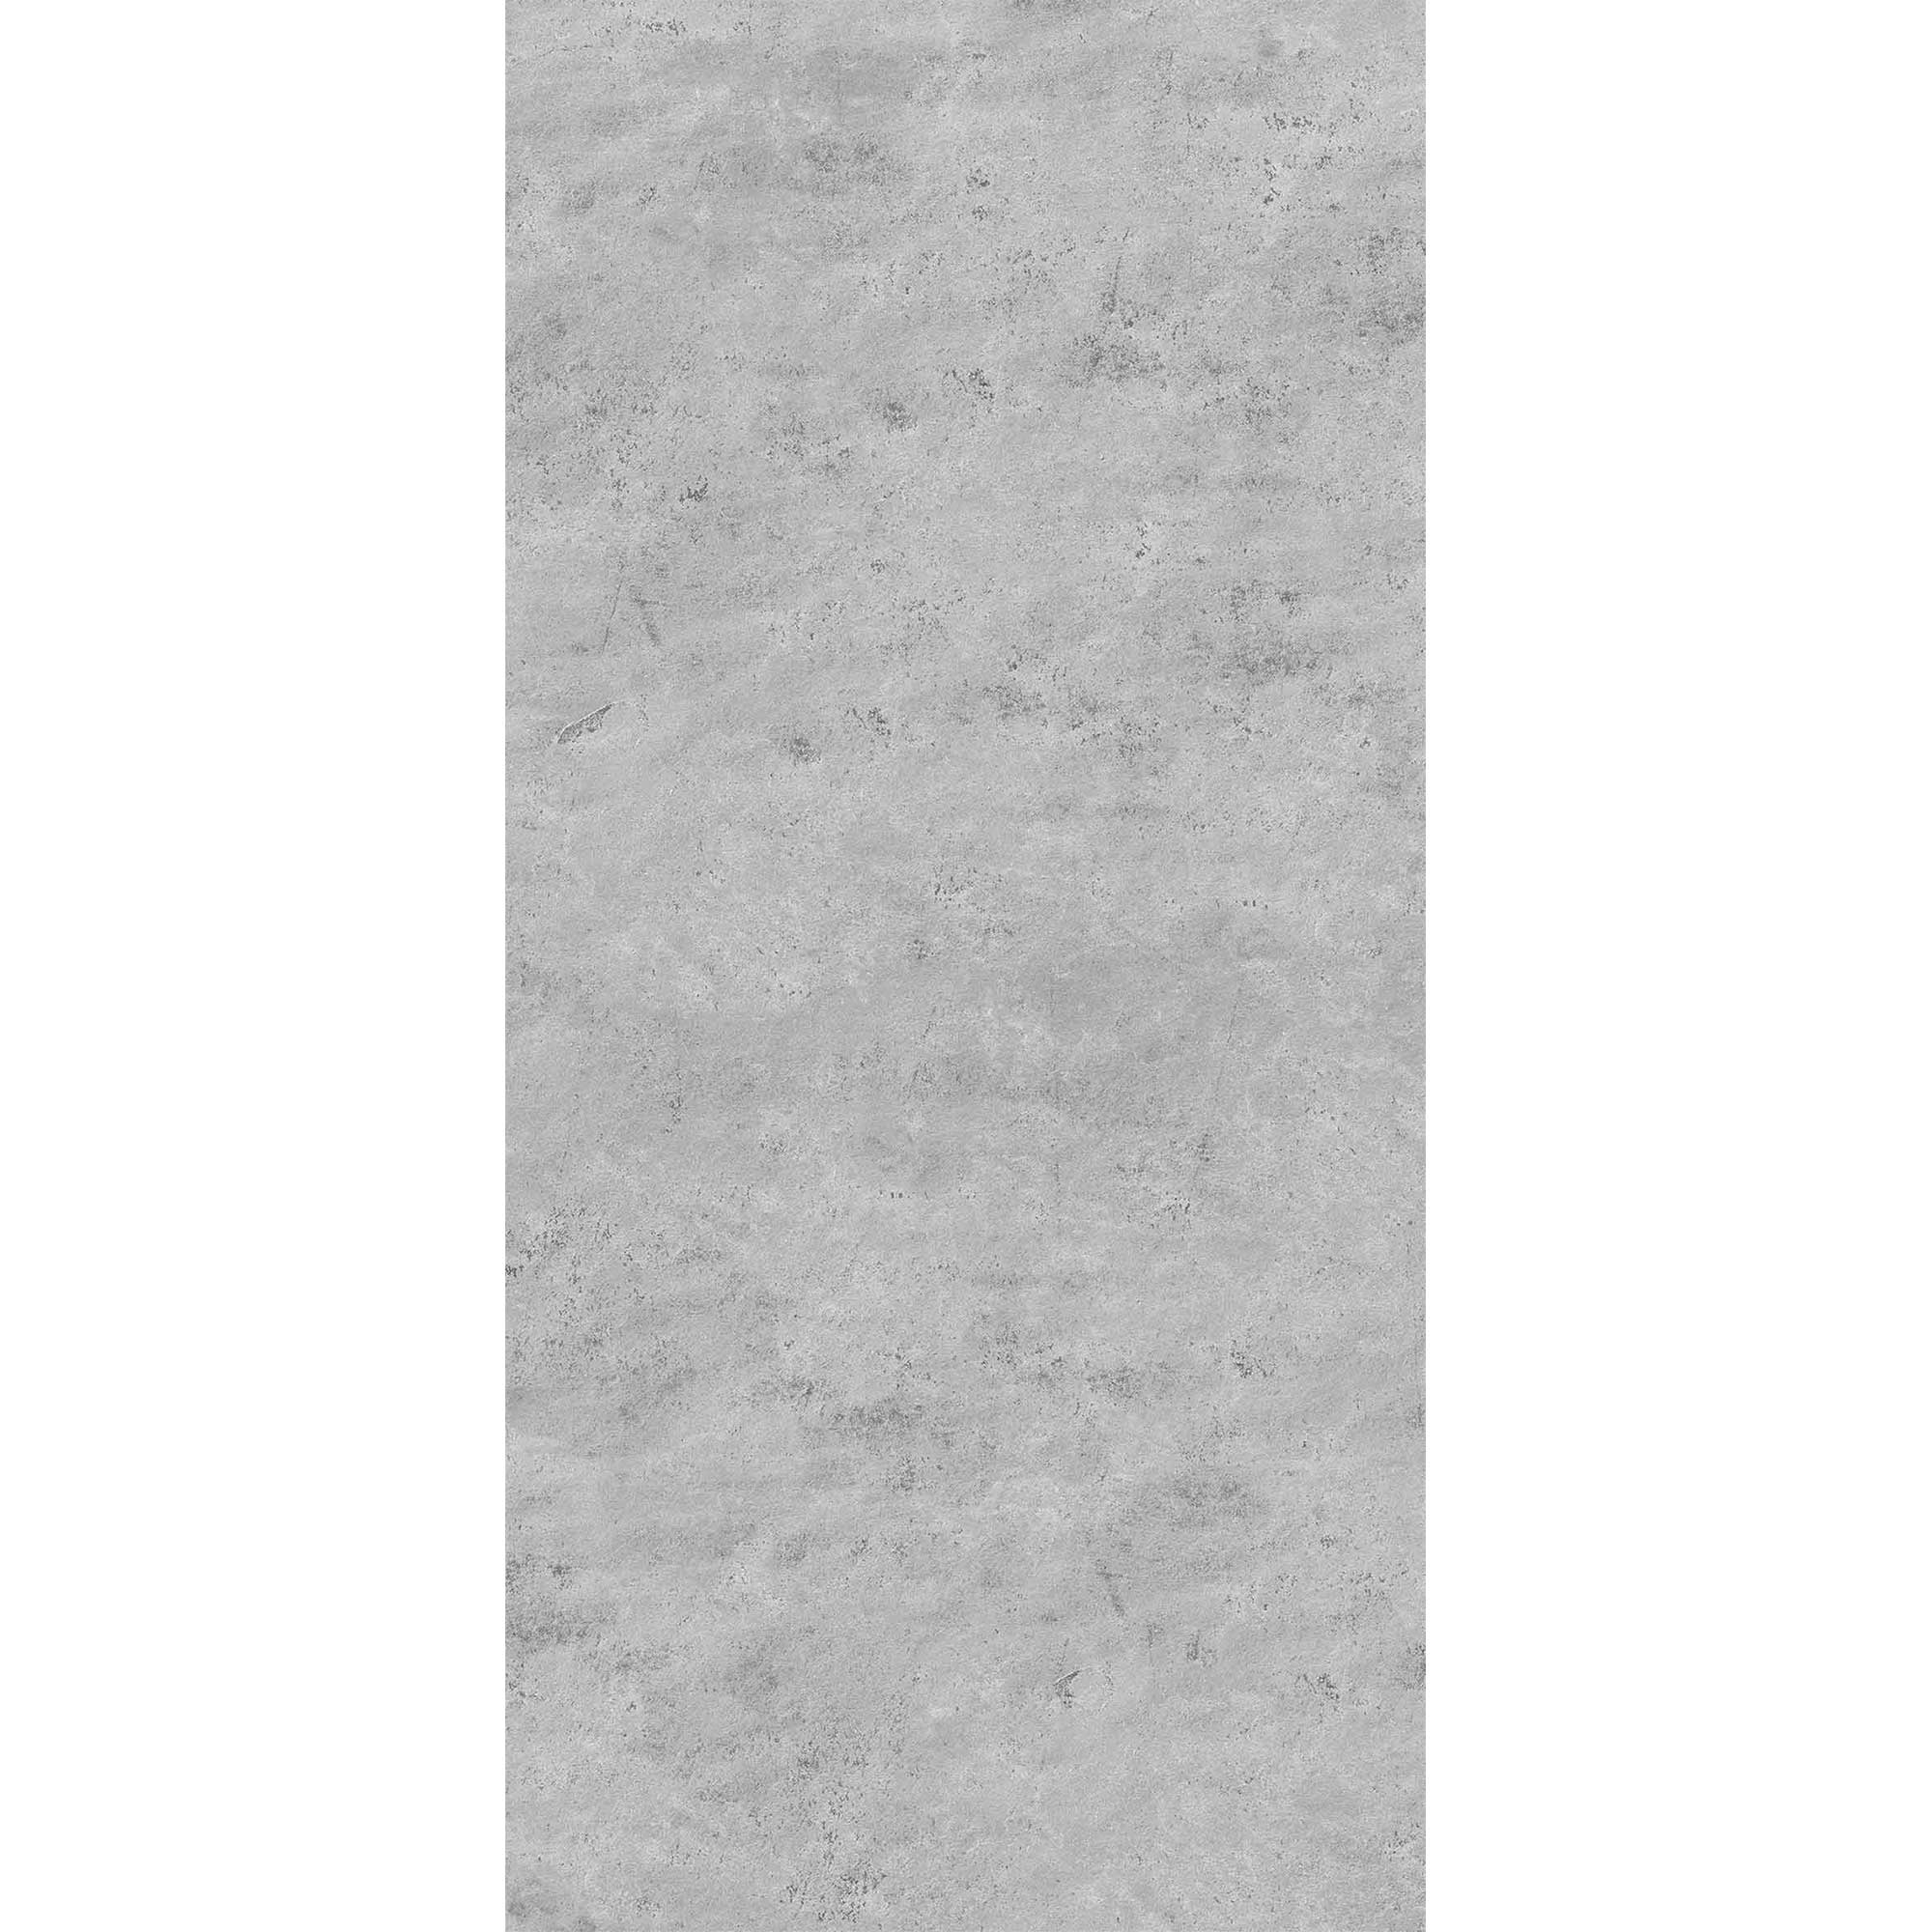 Duschrückwand hochglanz Marmoroptik grau 150 x 255 cm + product picture